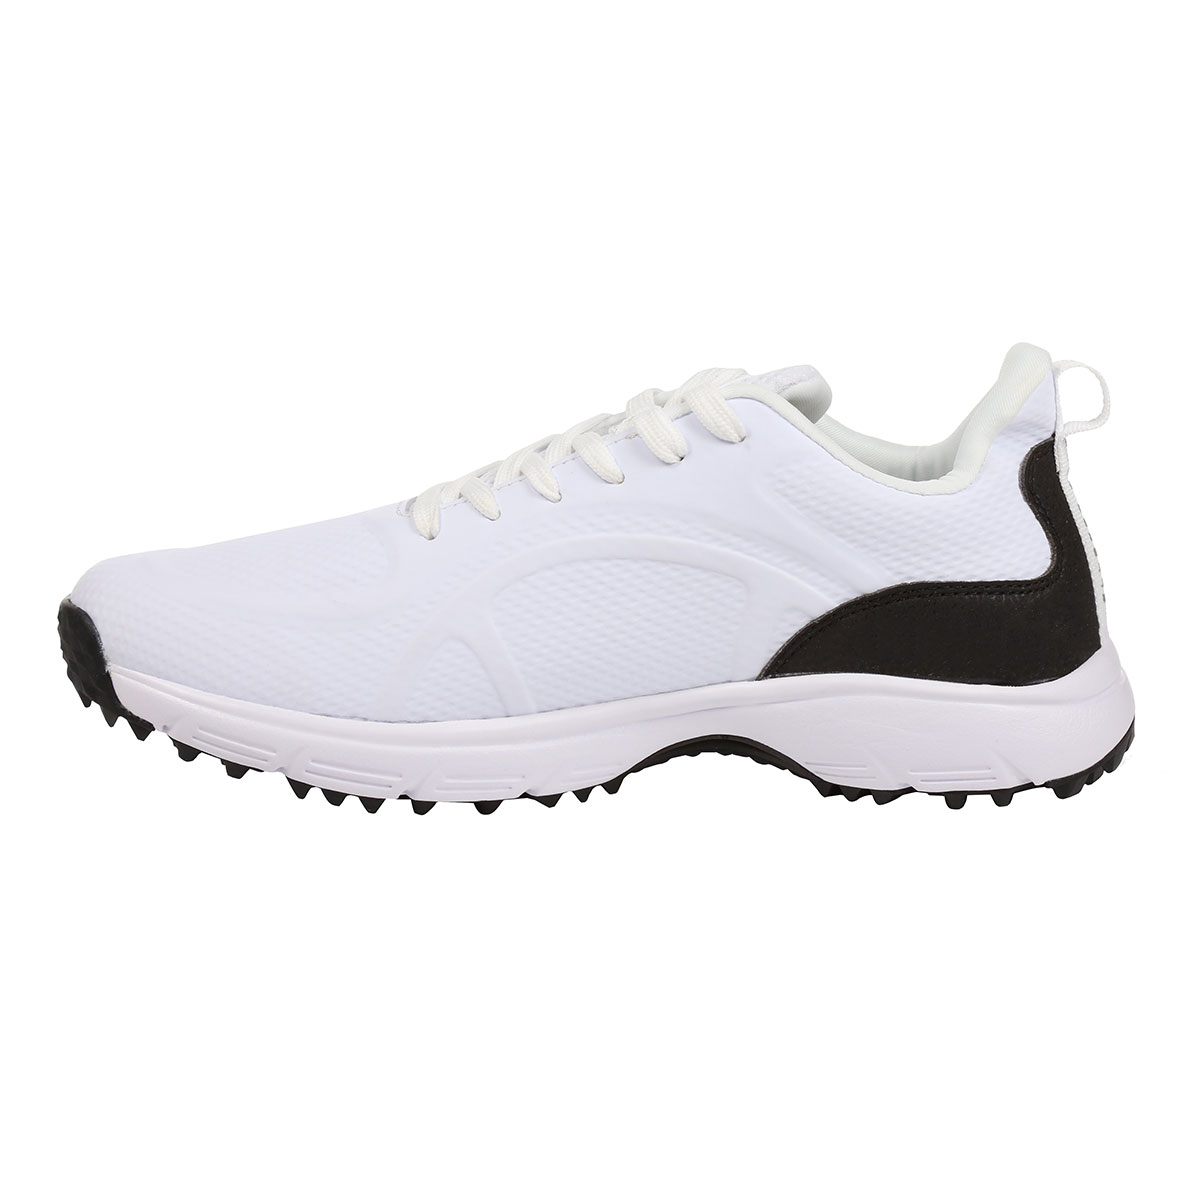 Ellesse Men's Zenith Waterproof Spikeless Golf Shoes from american golf